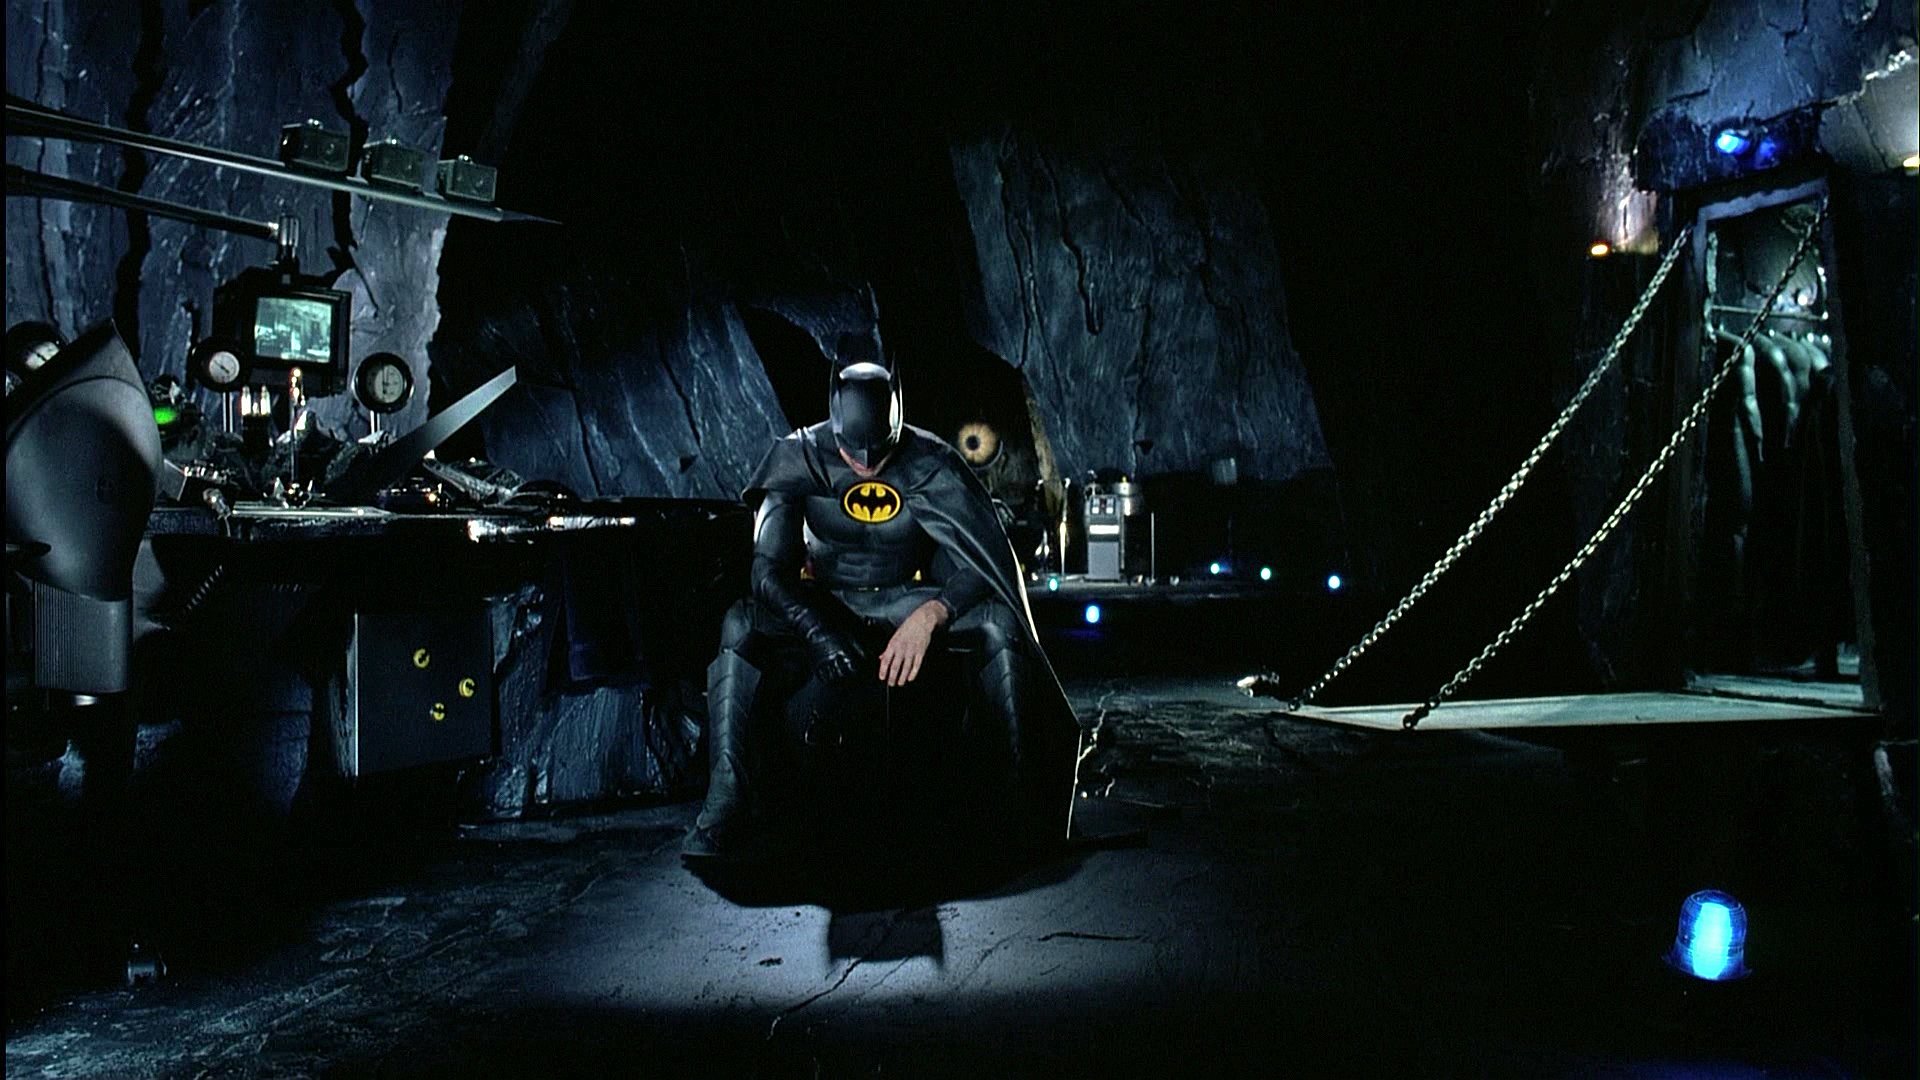 The Flash: Batman Set Photo Teases Michael Keaton's New Batsuit. Den of Geek